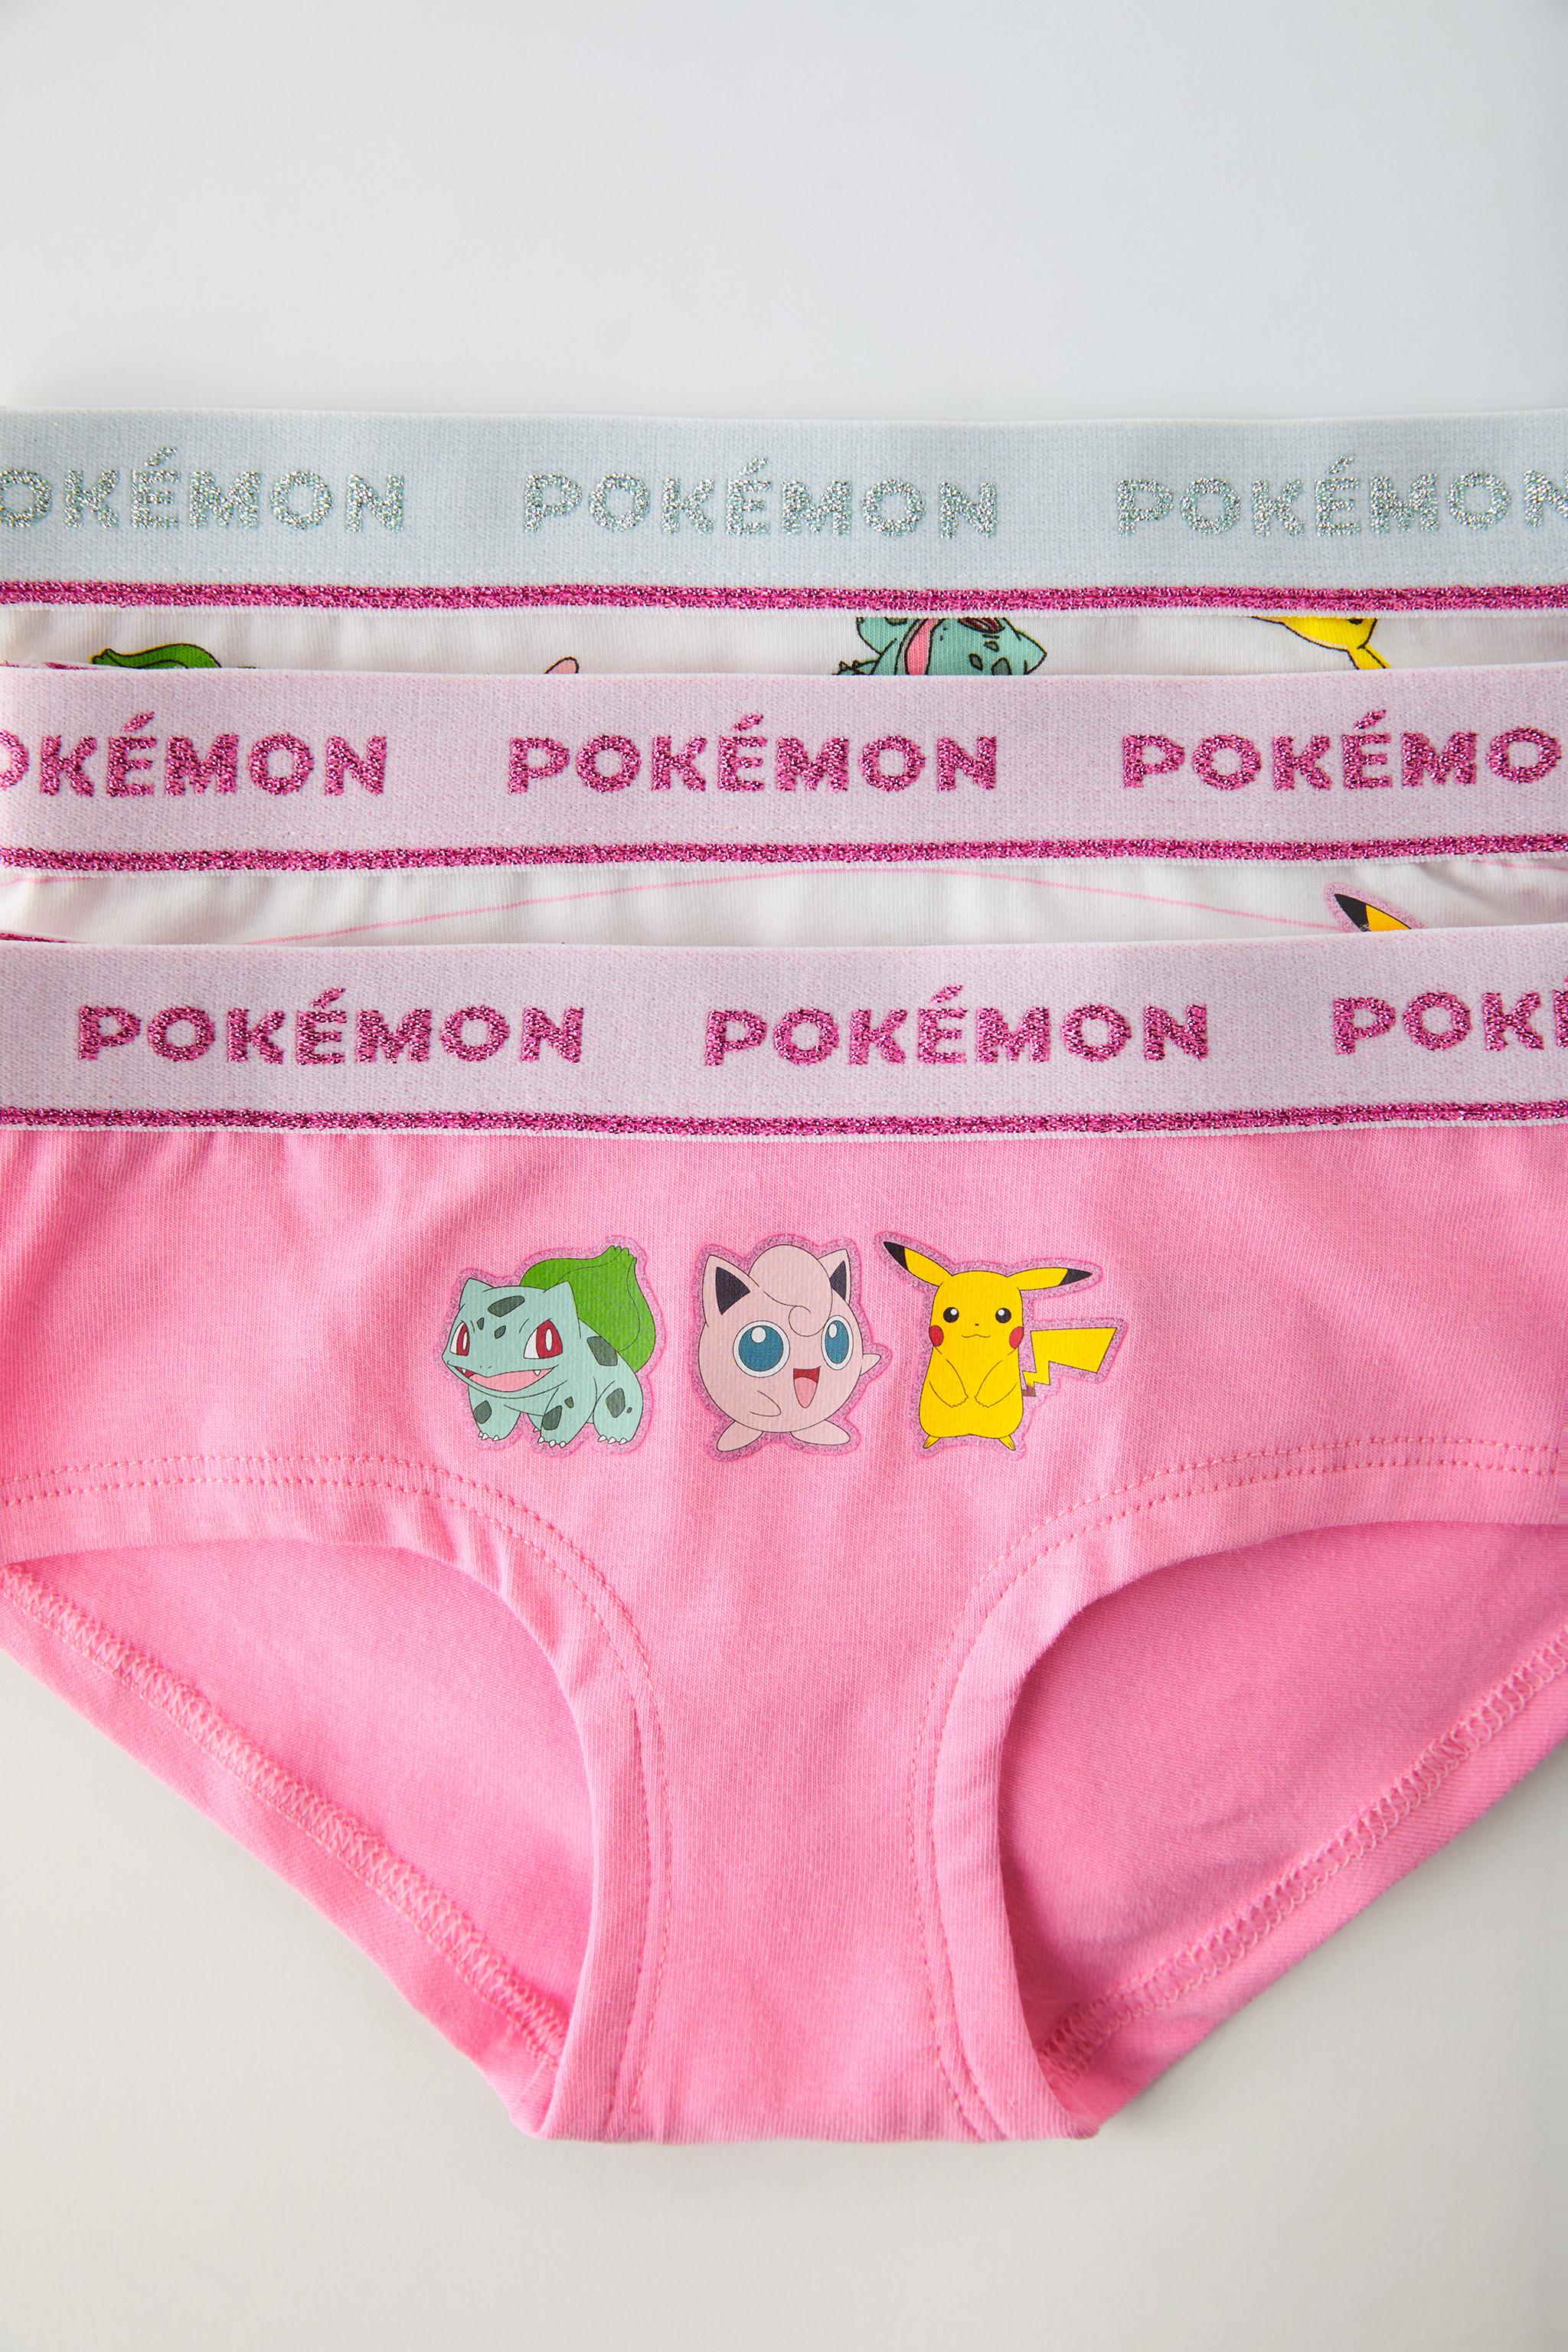 Pokemon Knickers Pikachu Squirtle Charmander Panties Womens UK Sizes 6 to  20 